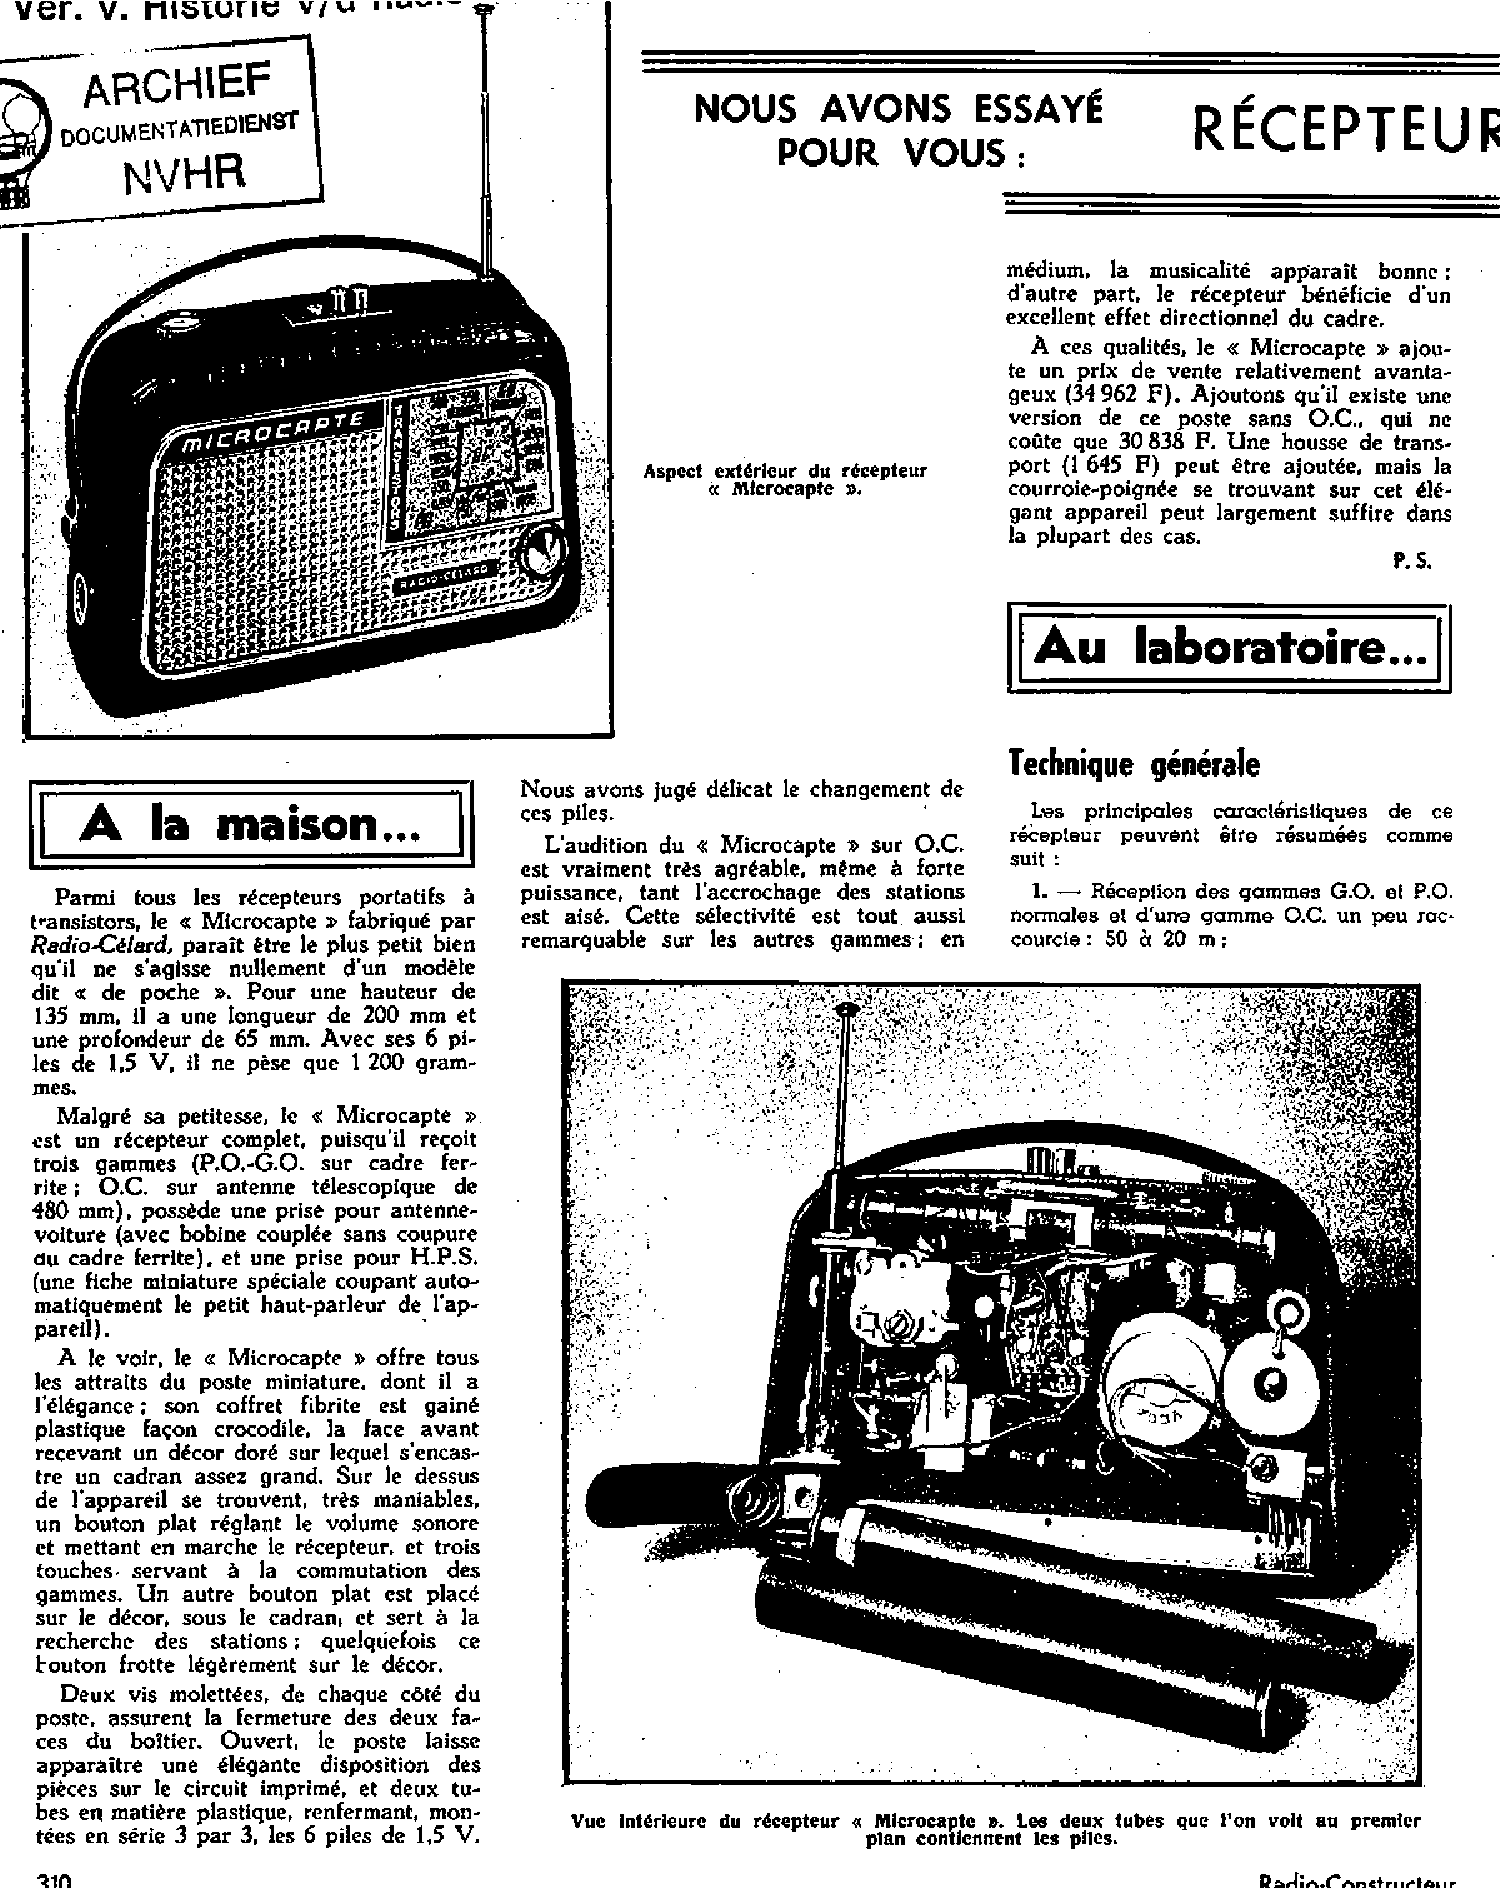 CELARD MICROCAPTE PORTABLE RADIO 1960 SCH service manual (1st page)